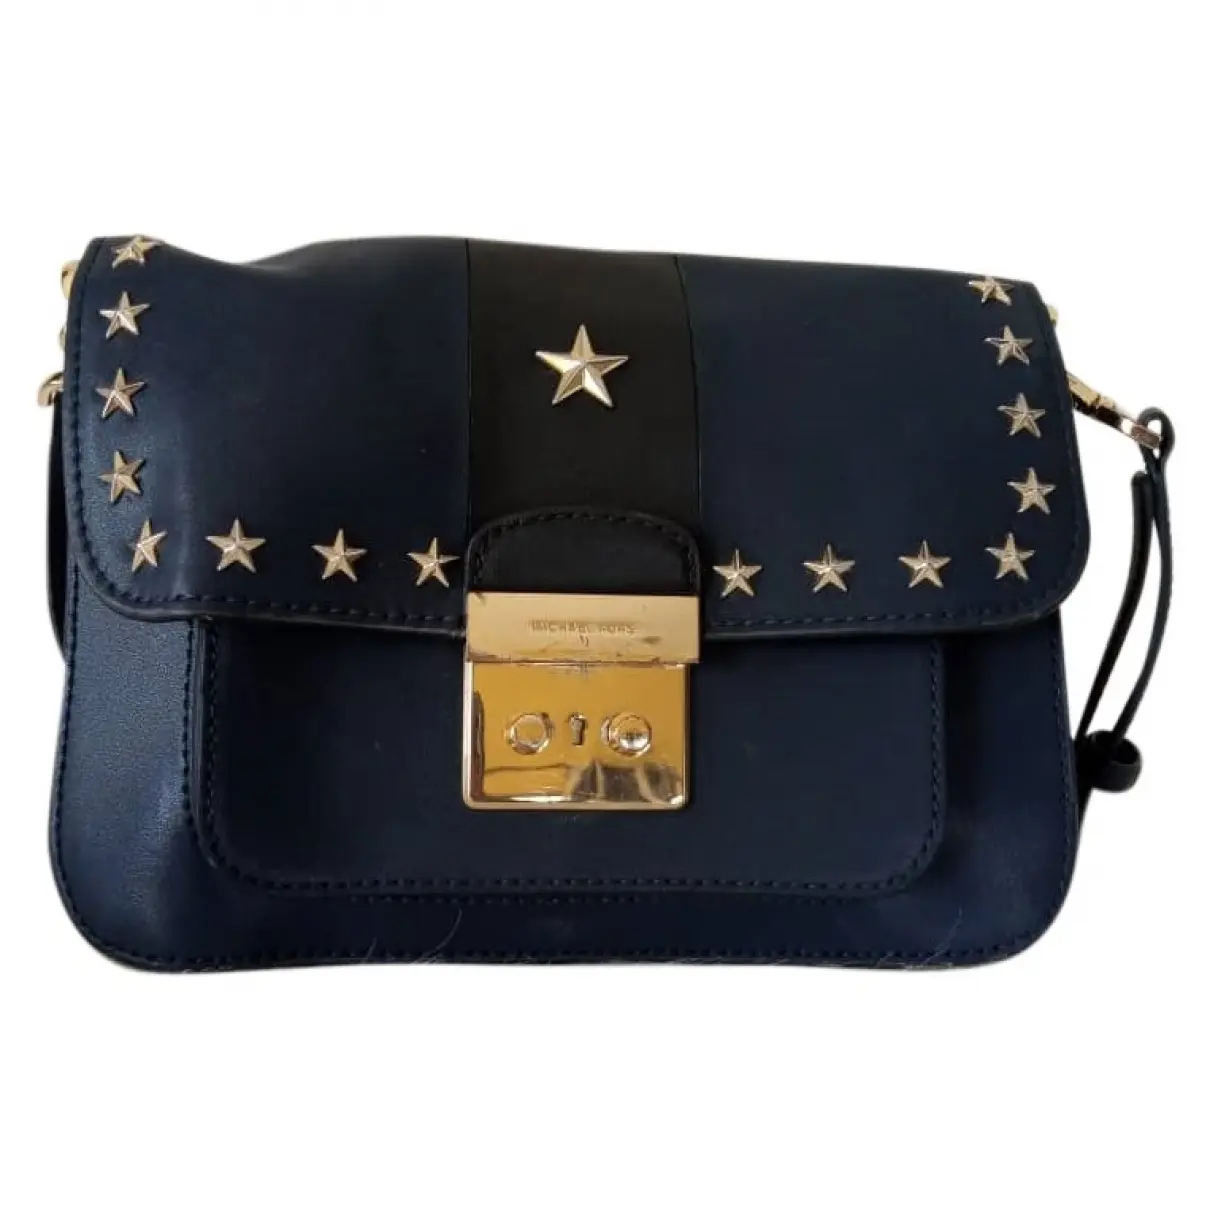 Sloan leather handbag Michael Kors